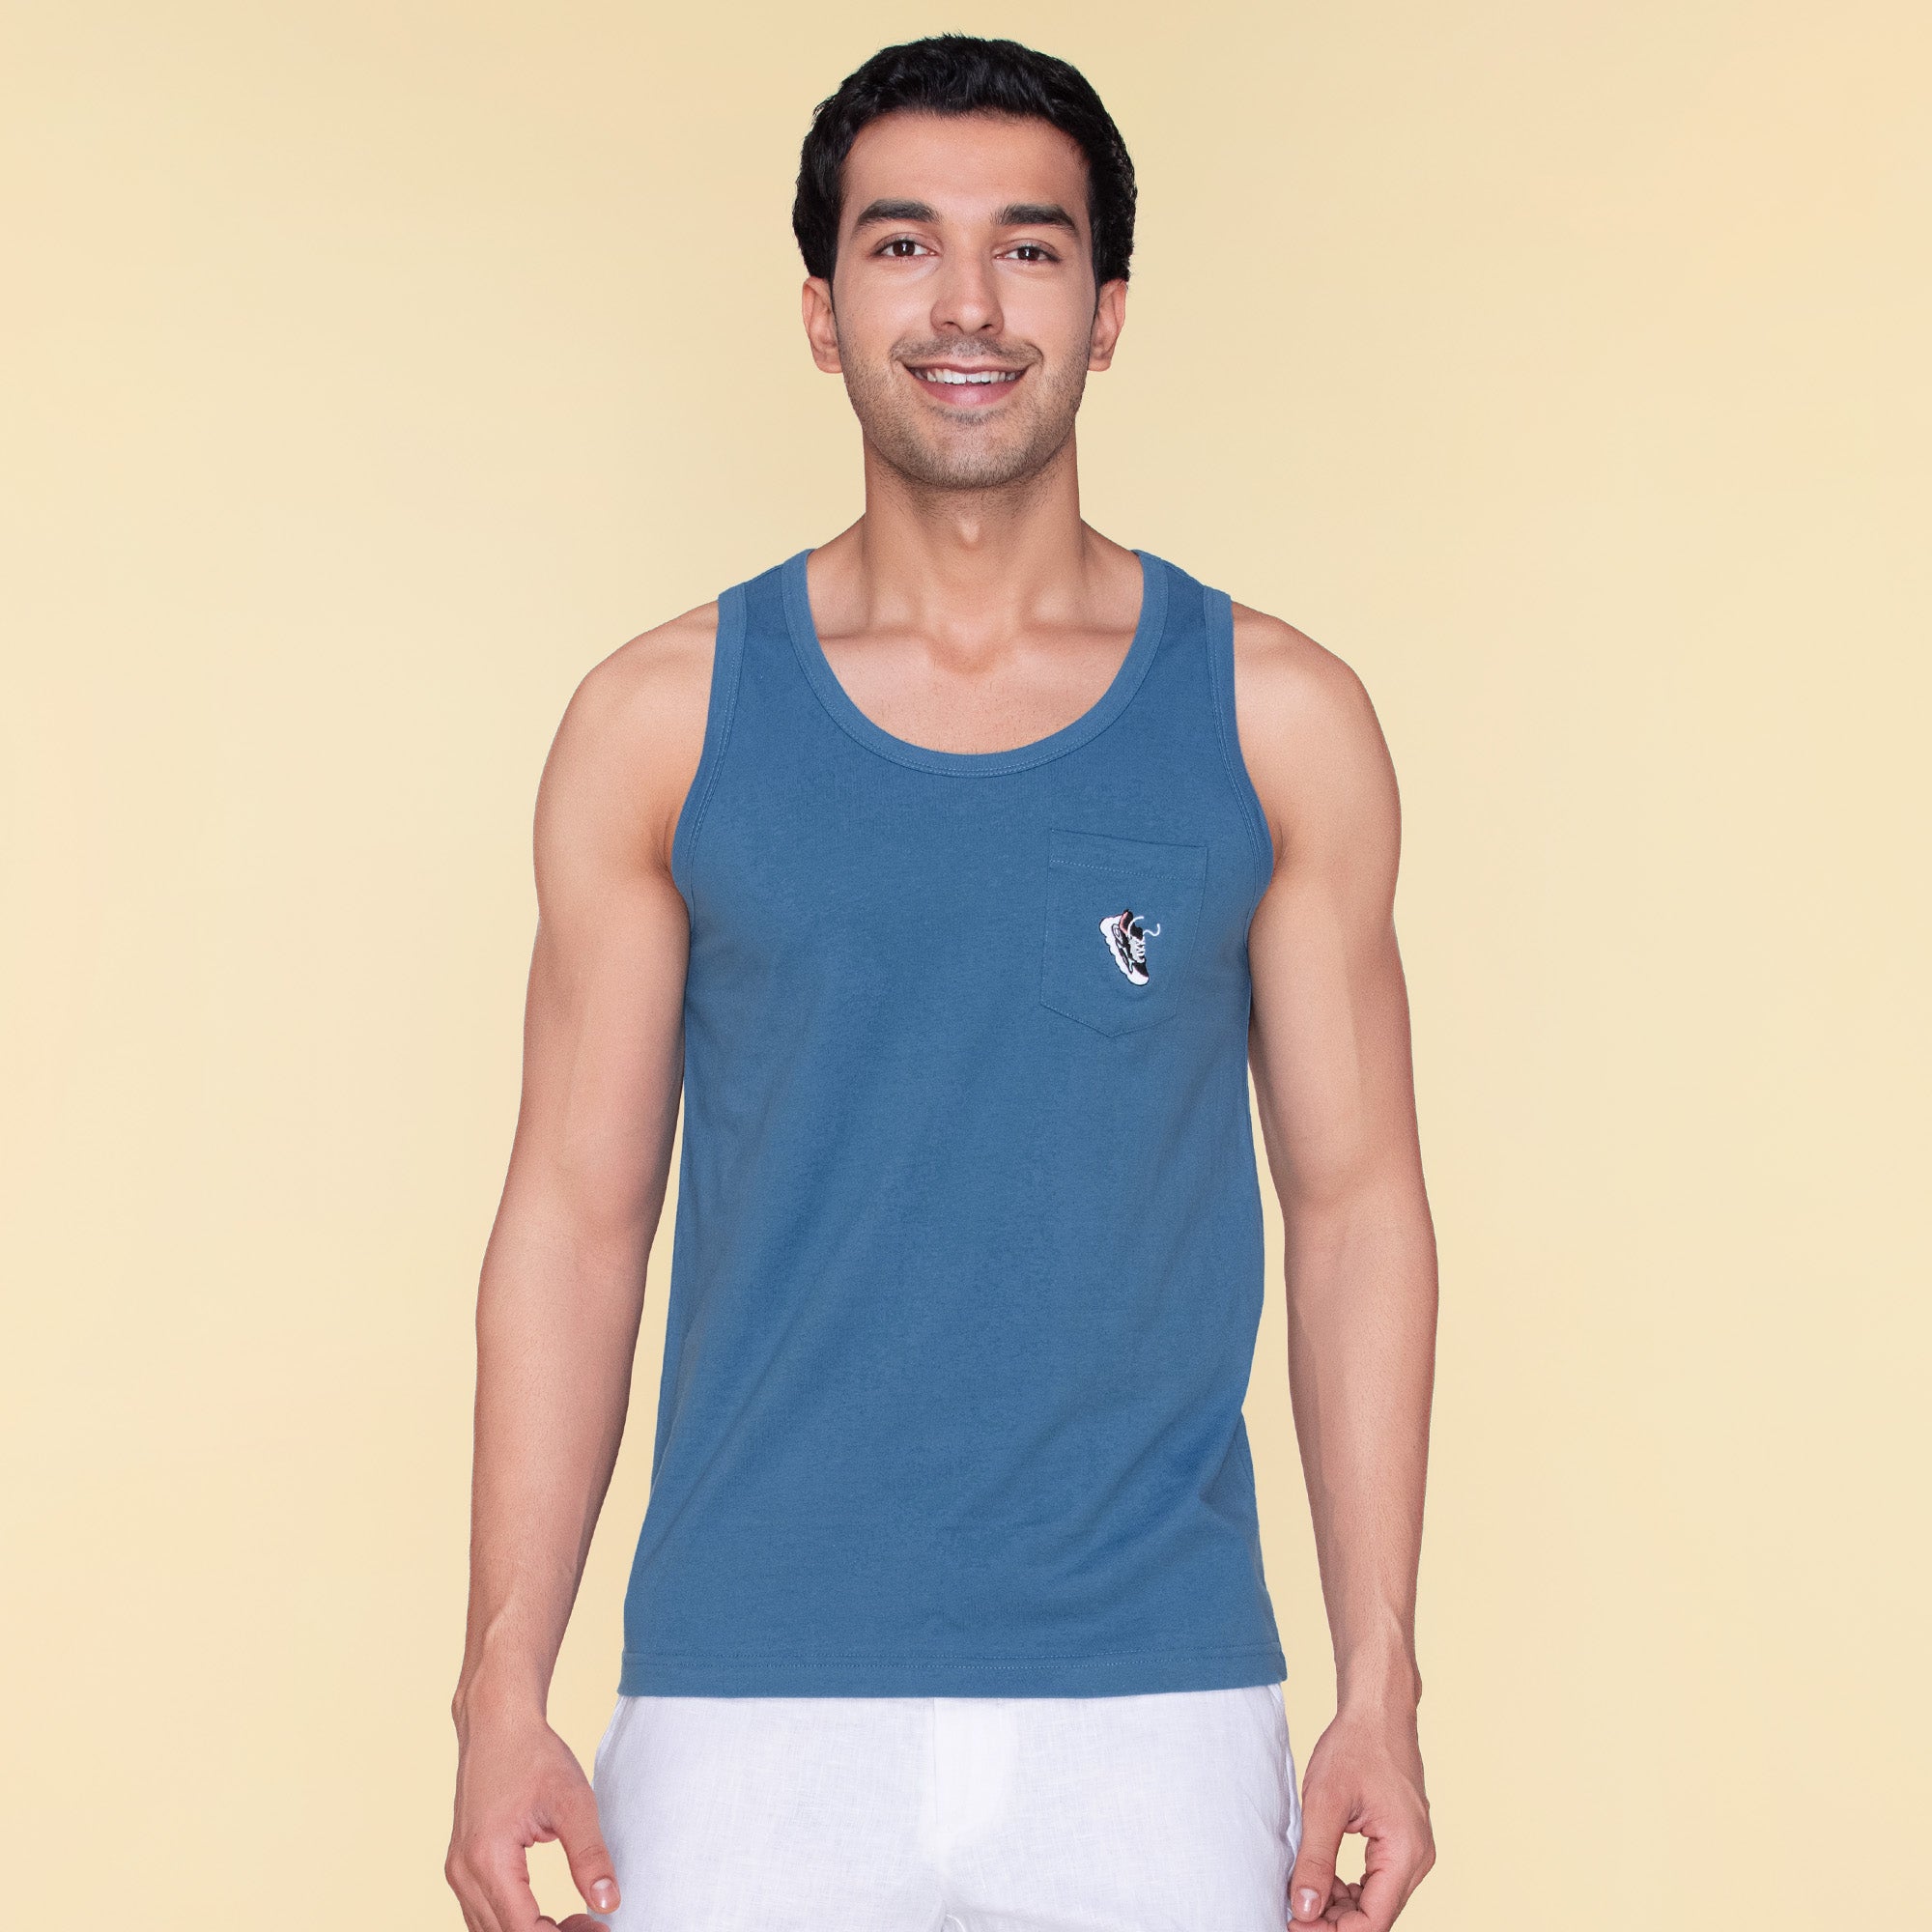 Men's Tank Tops - Buy Men's Tank T-Shirts For Gym Online in India